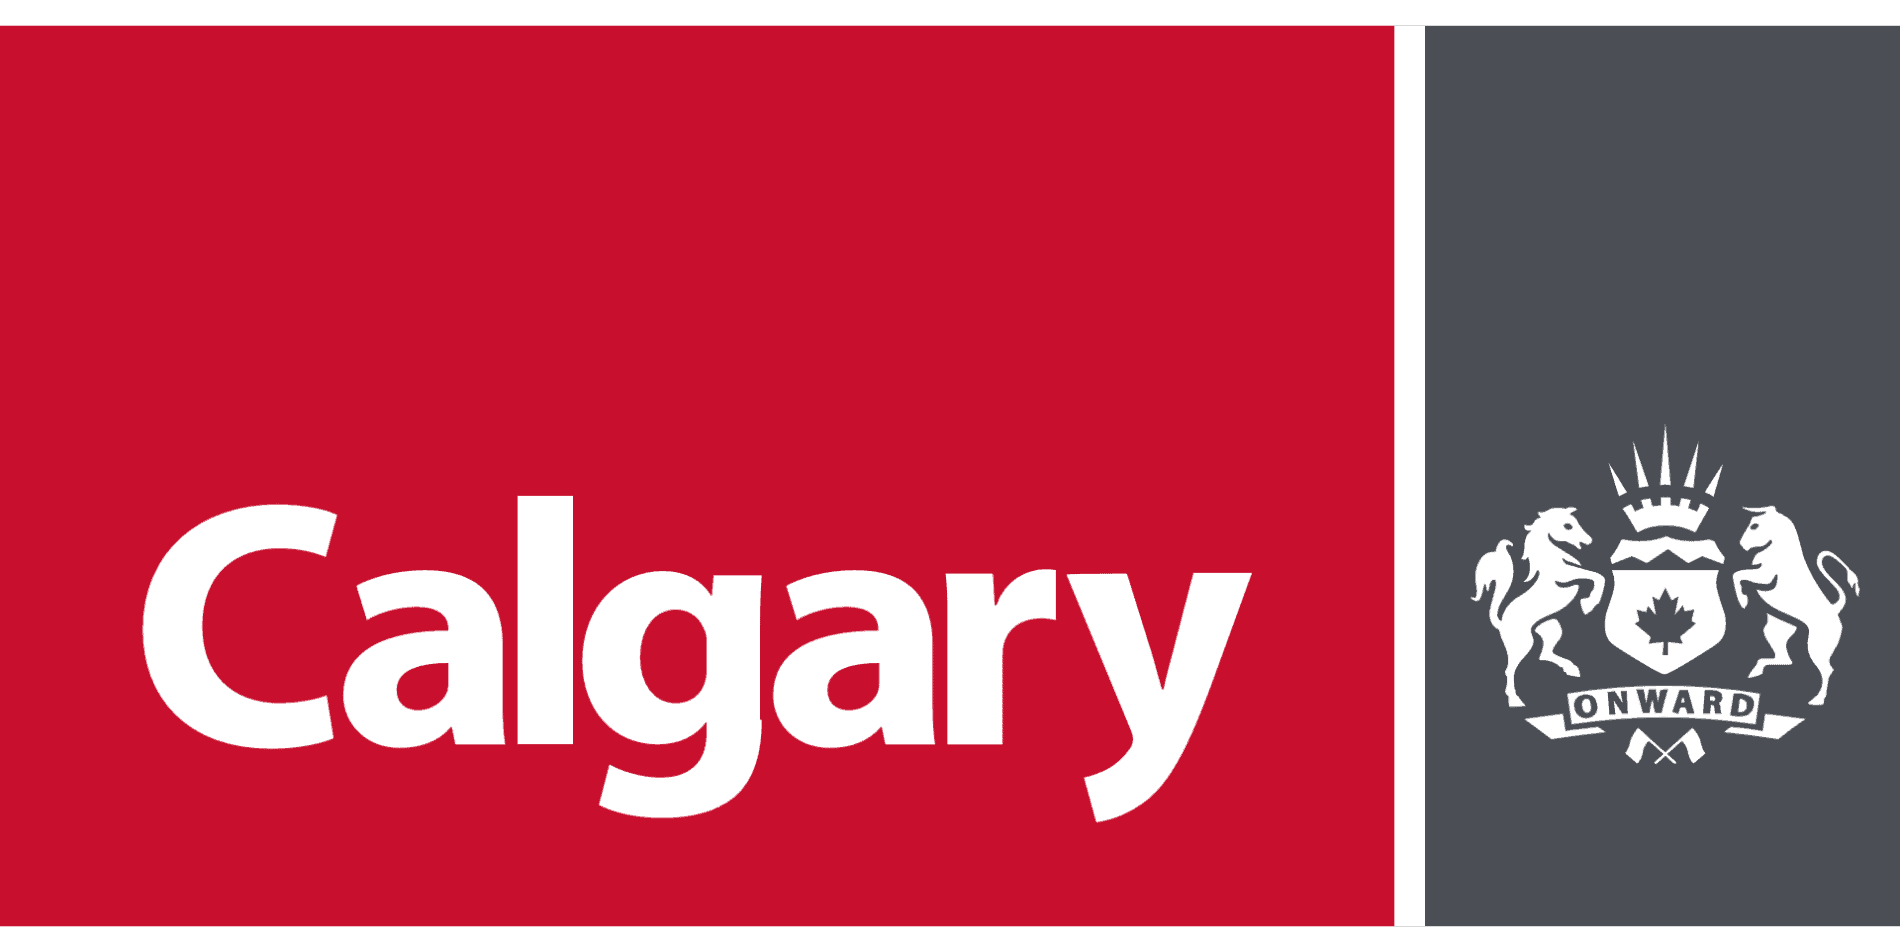 City of Calgary logo - carya